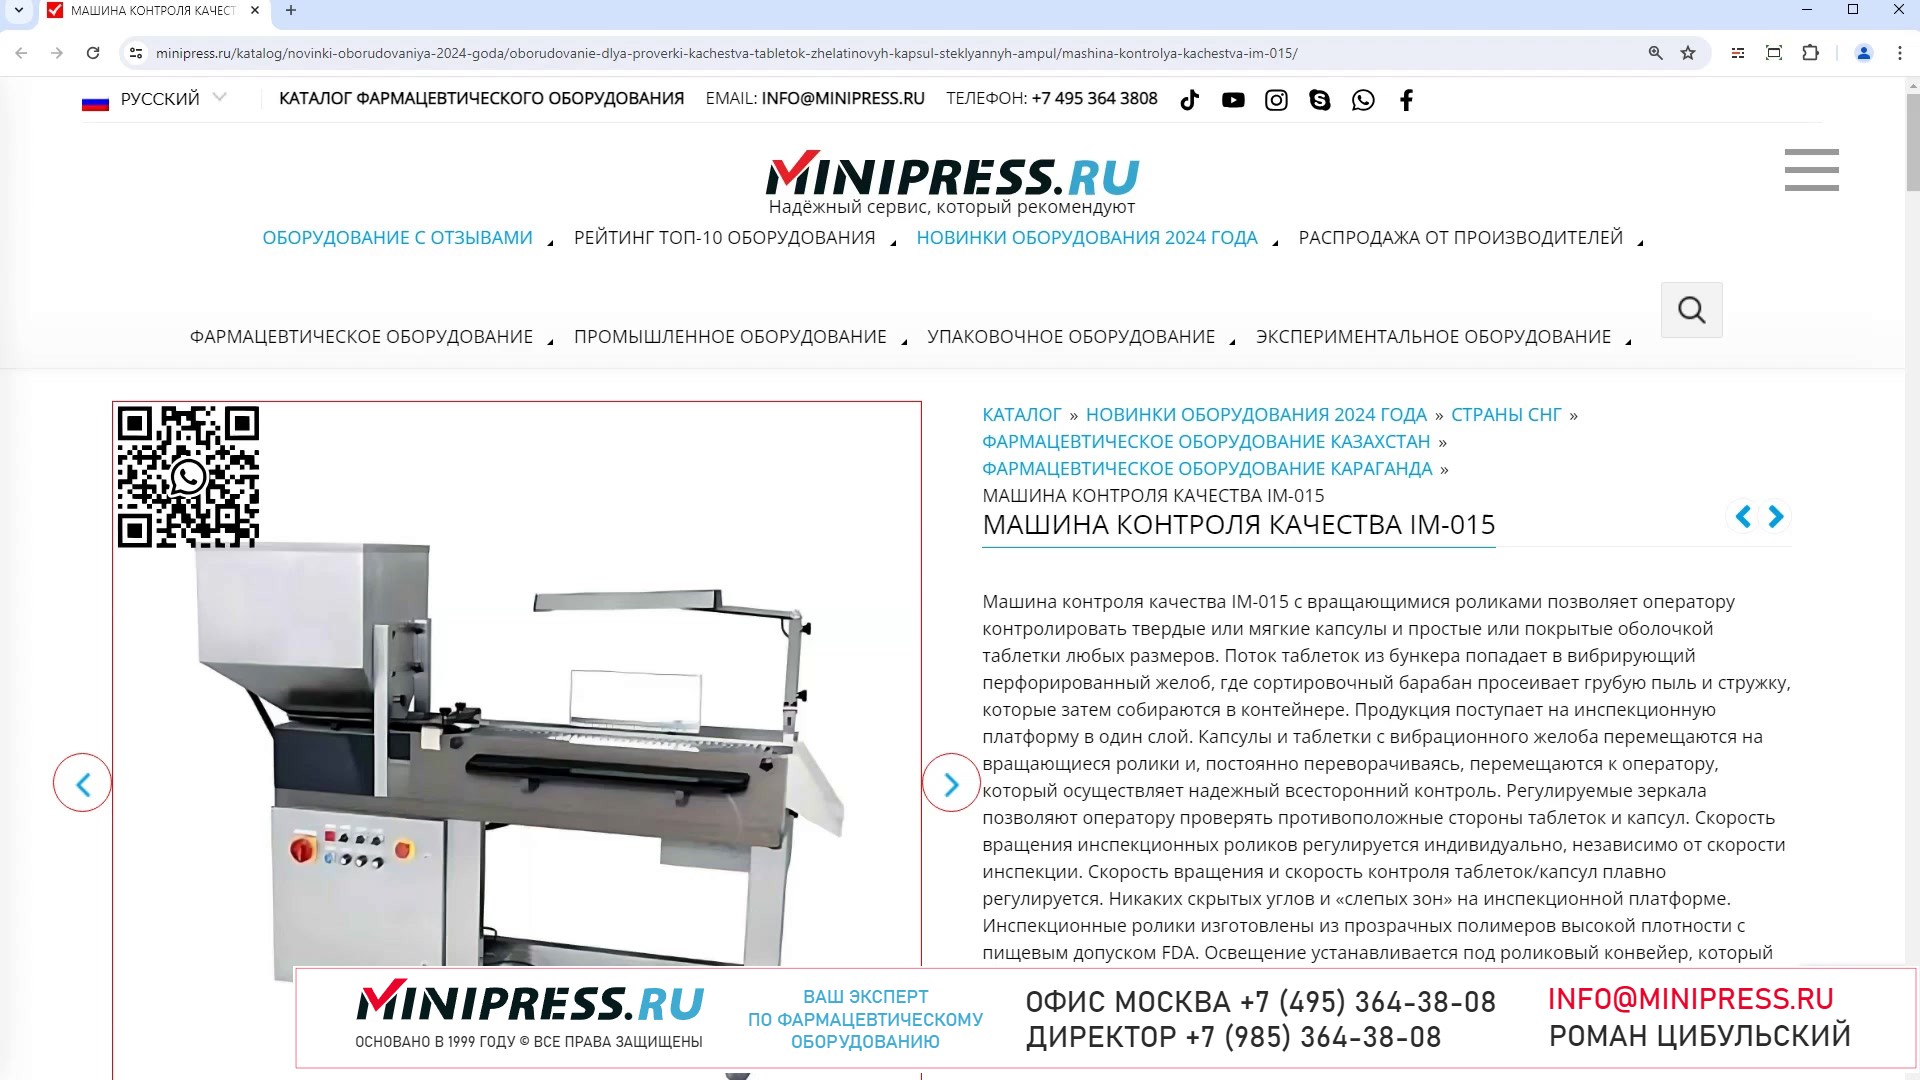 Minipress.ru Машина контроля качества IM-015